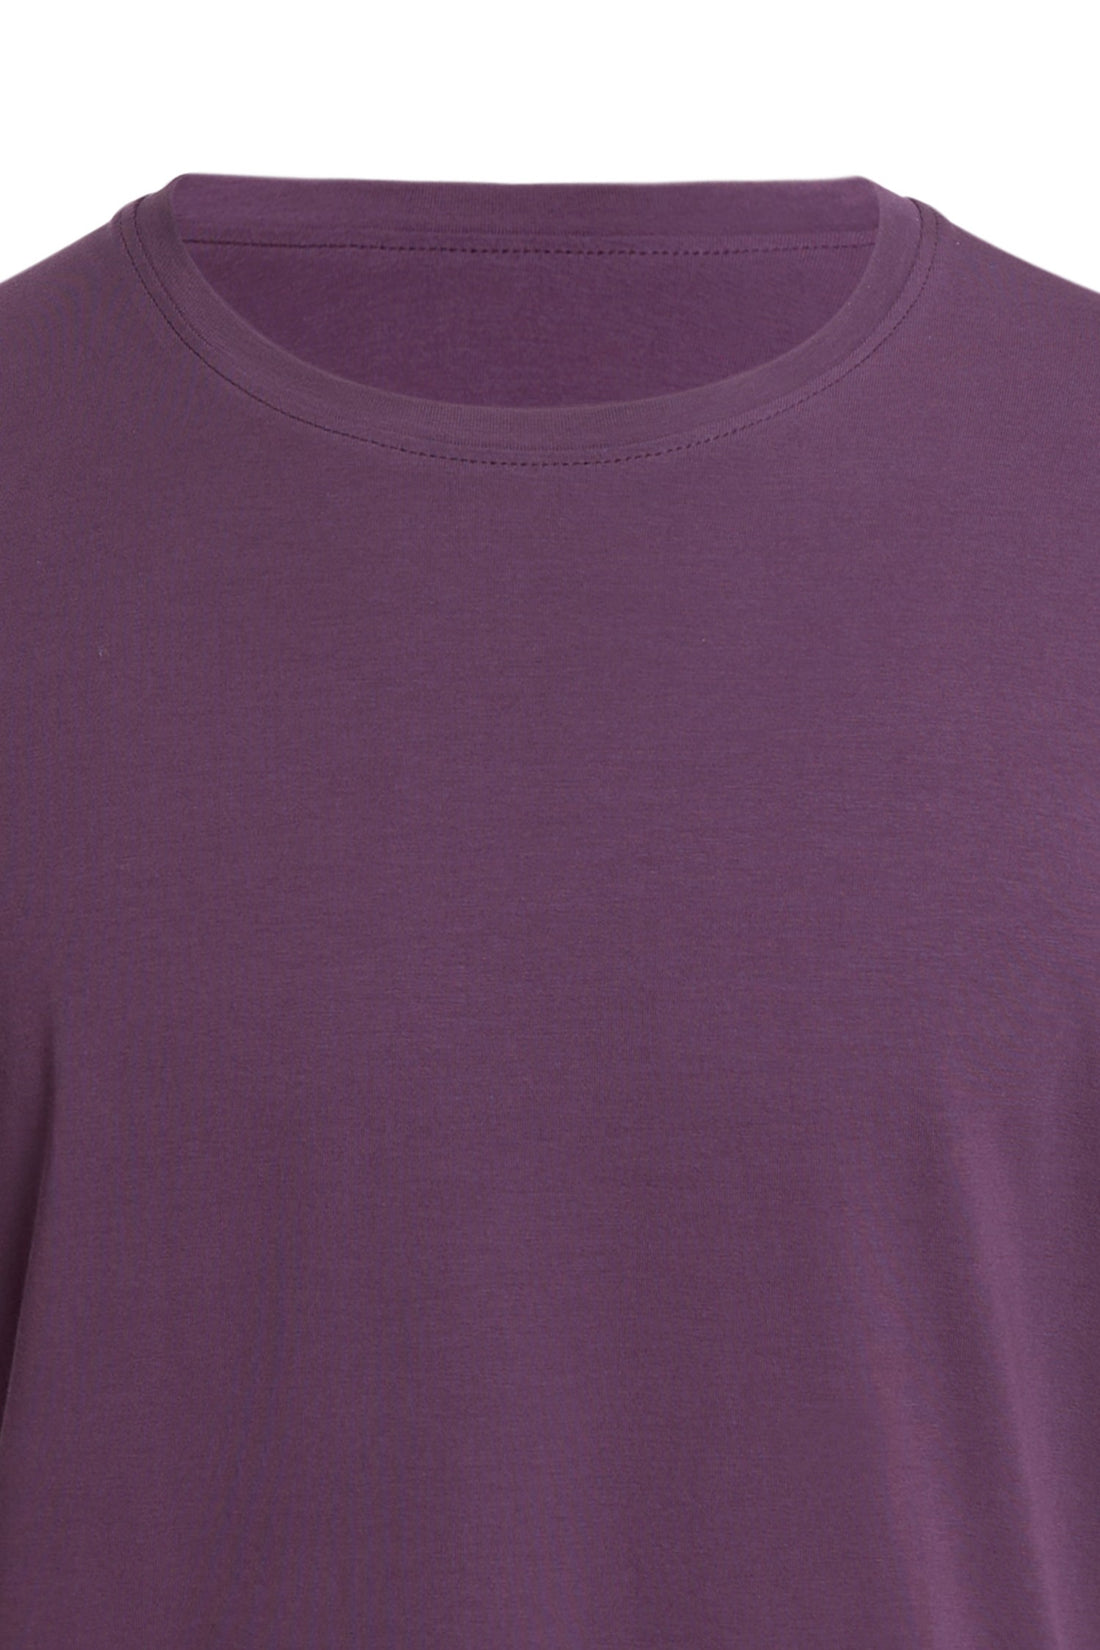 Lilac short sleeve T-shirt